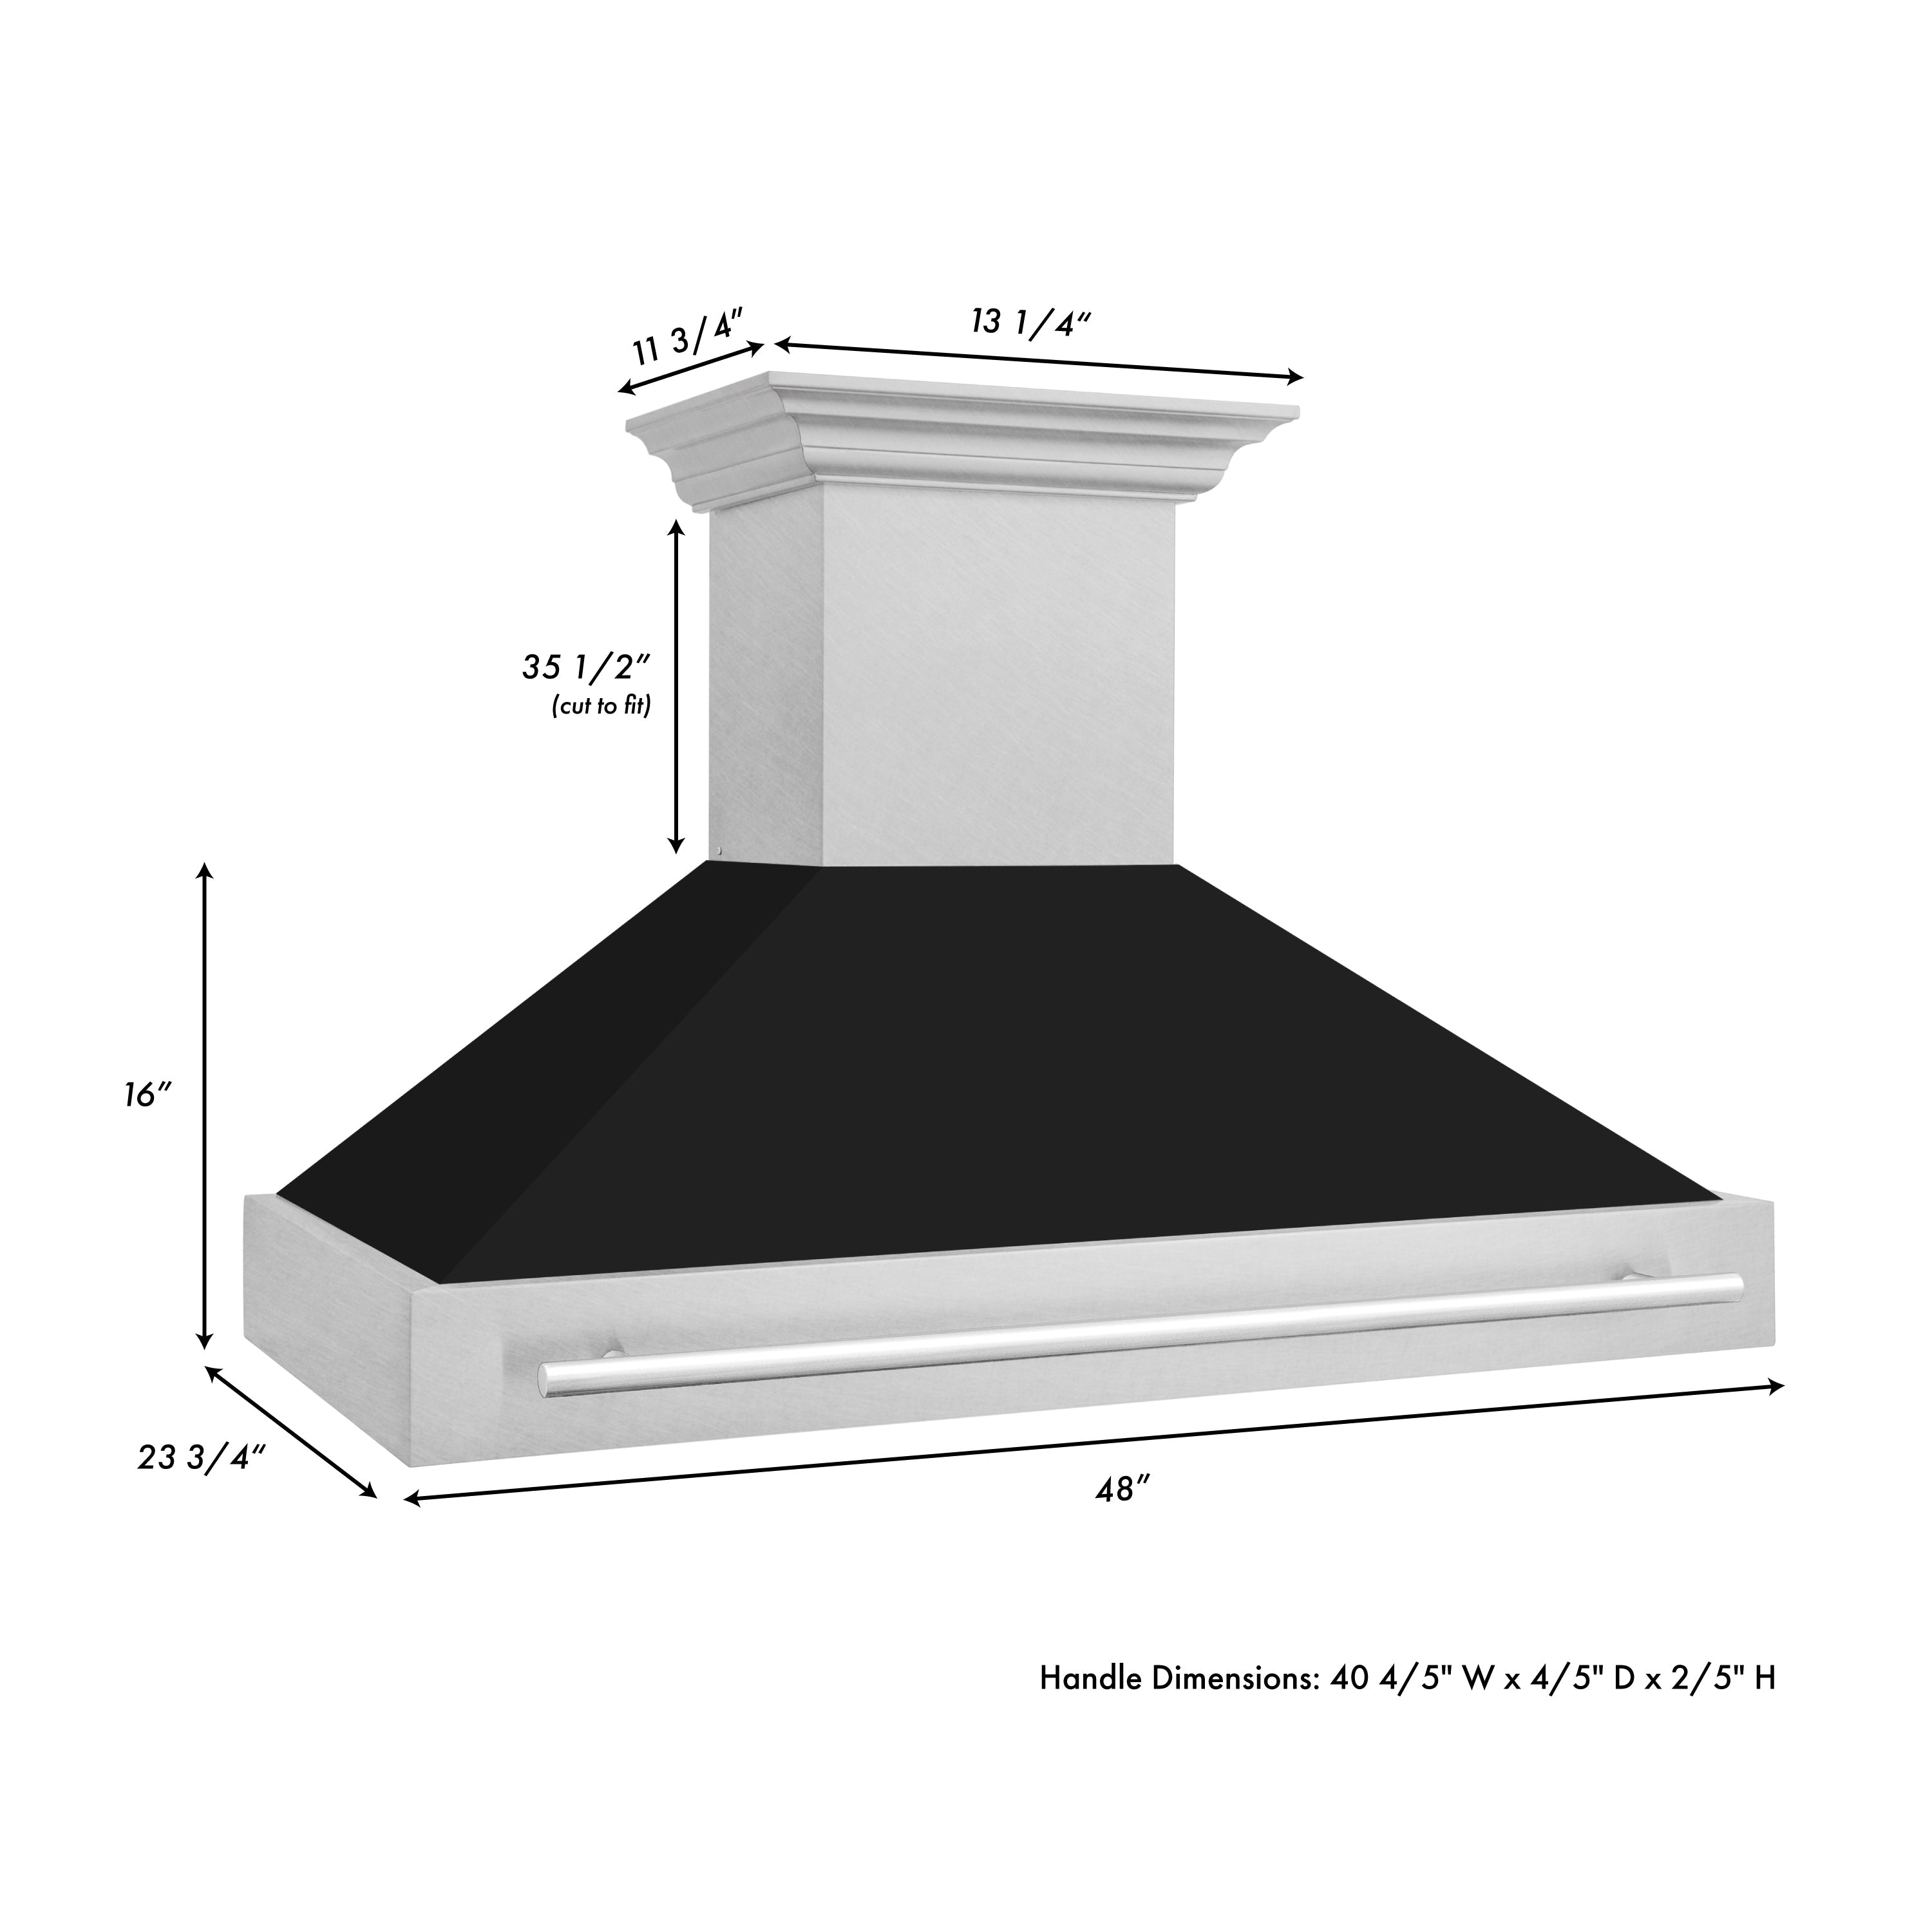 ZLINE 48 in. Fingerprint Resistant Stainless Steel Range Hood with Black Matte shell dimensions.